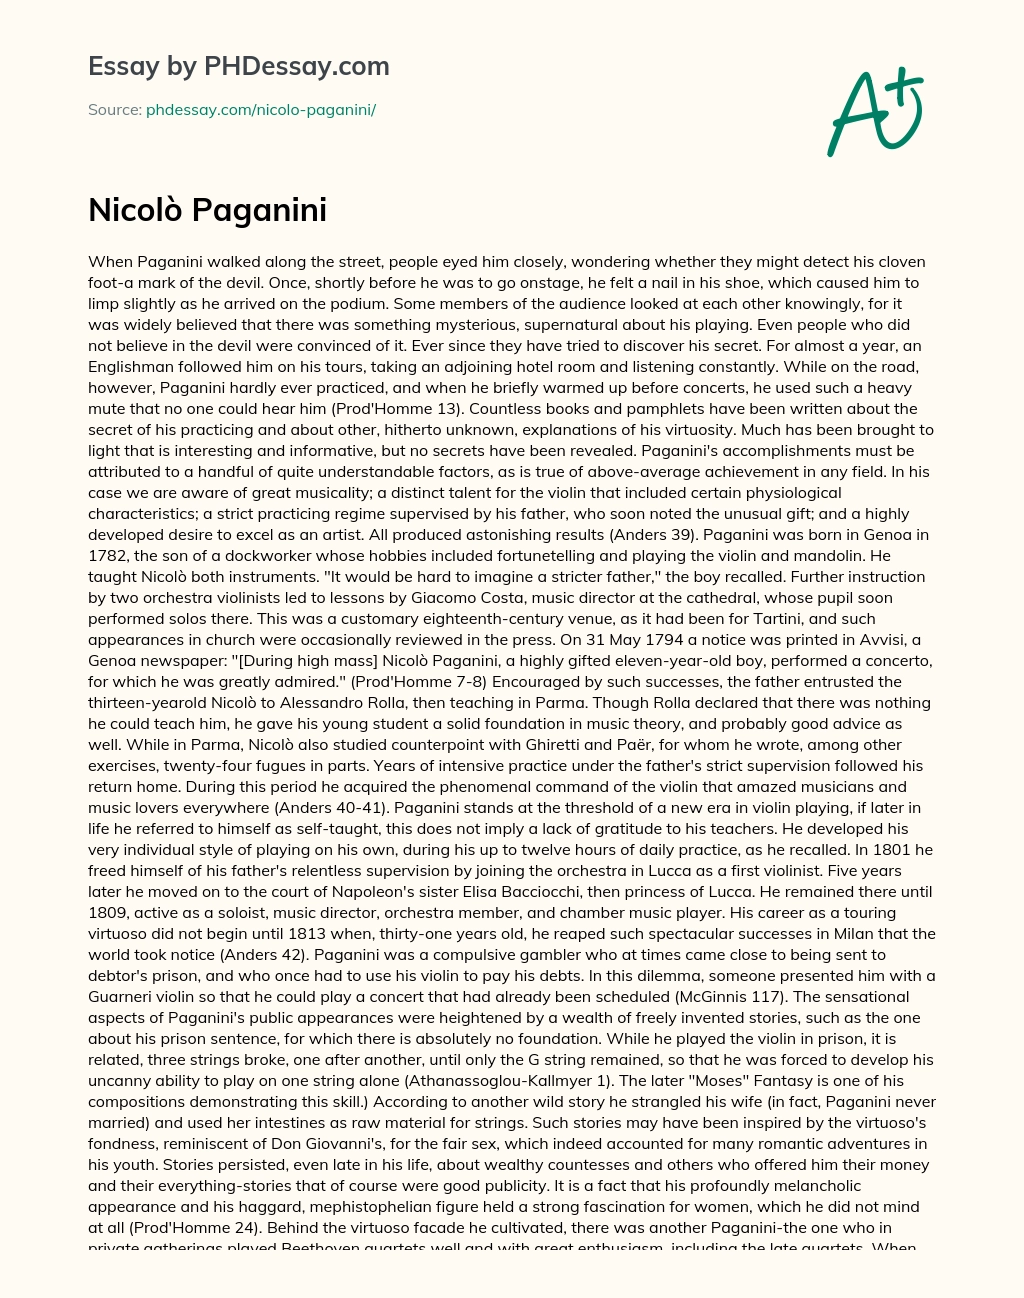 Nicolò Paganini essay